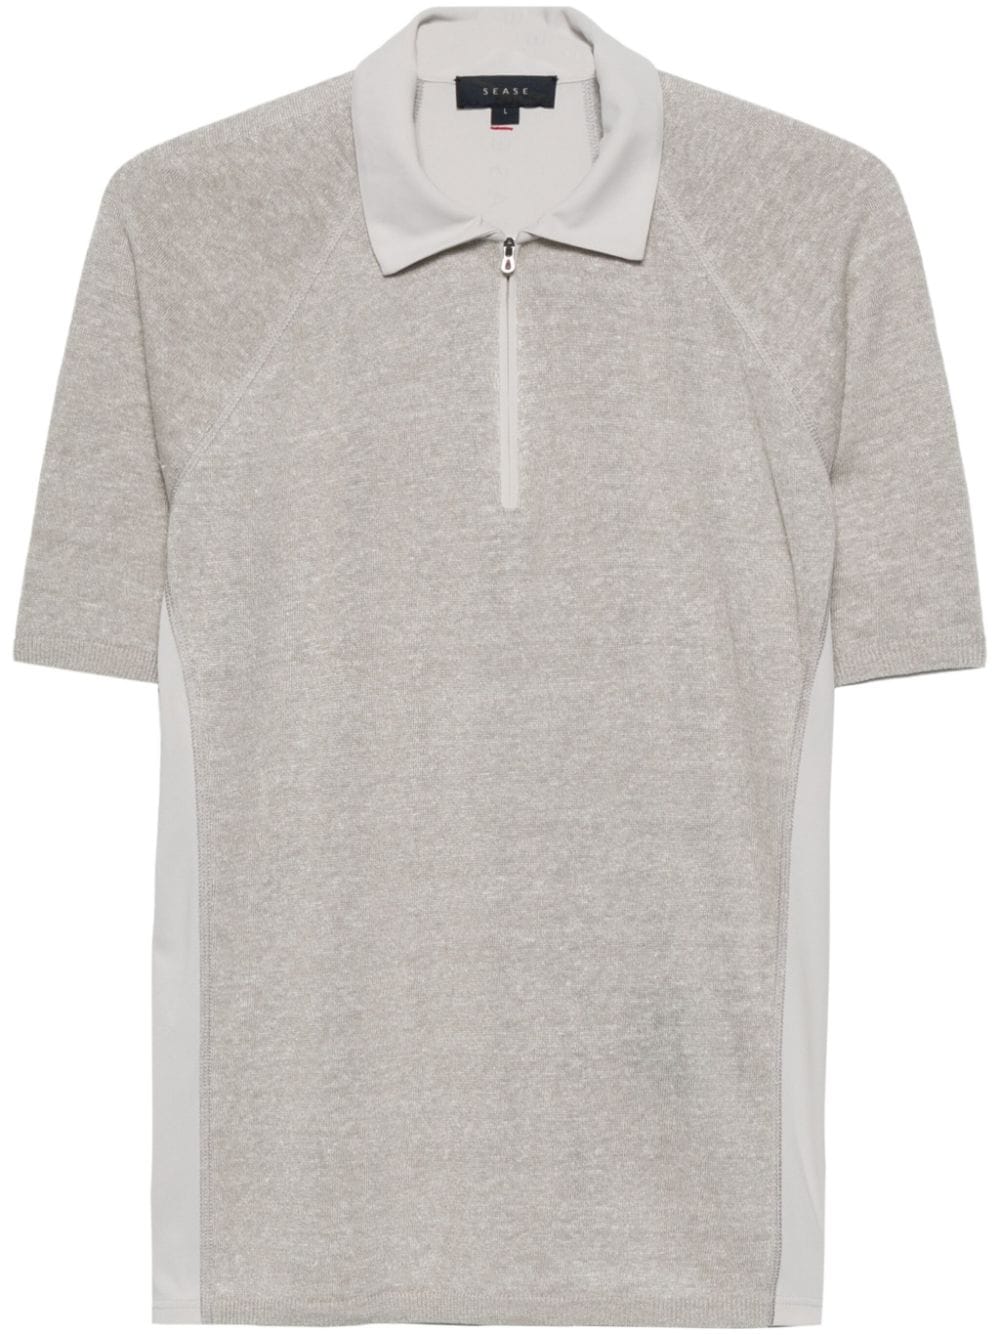 Sease Hybrid Polo Shirt In Grey